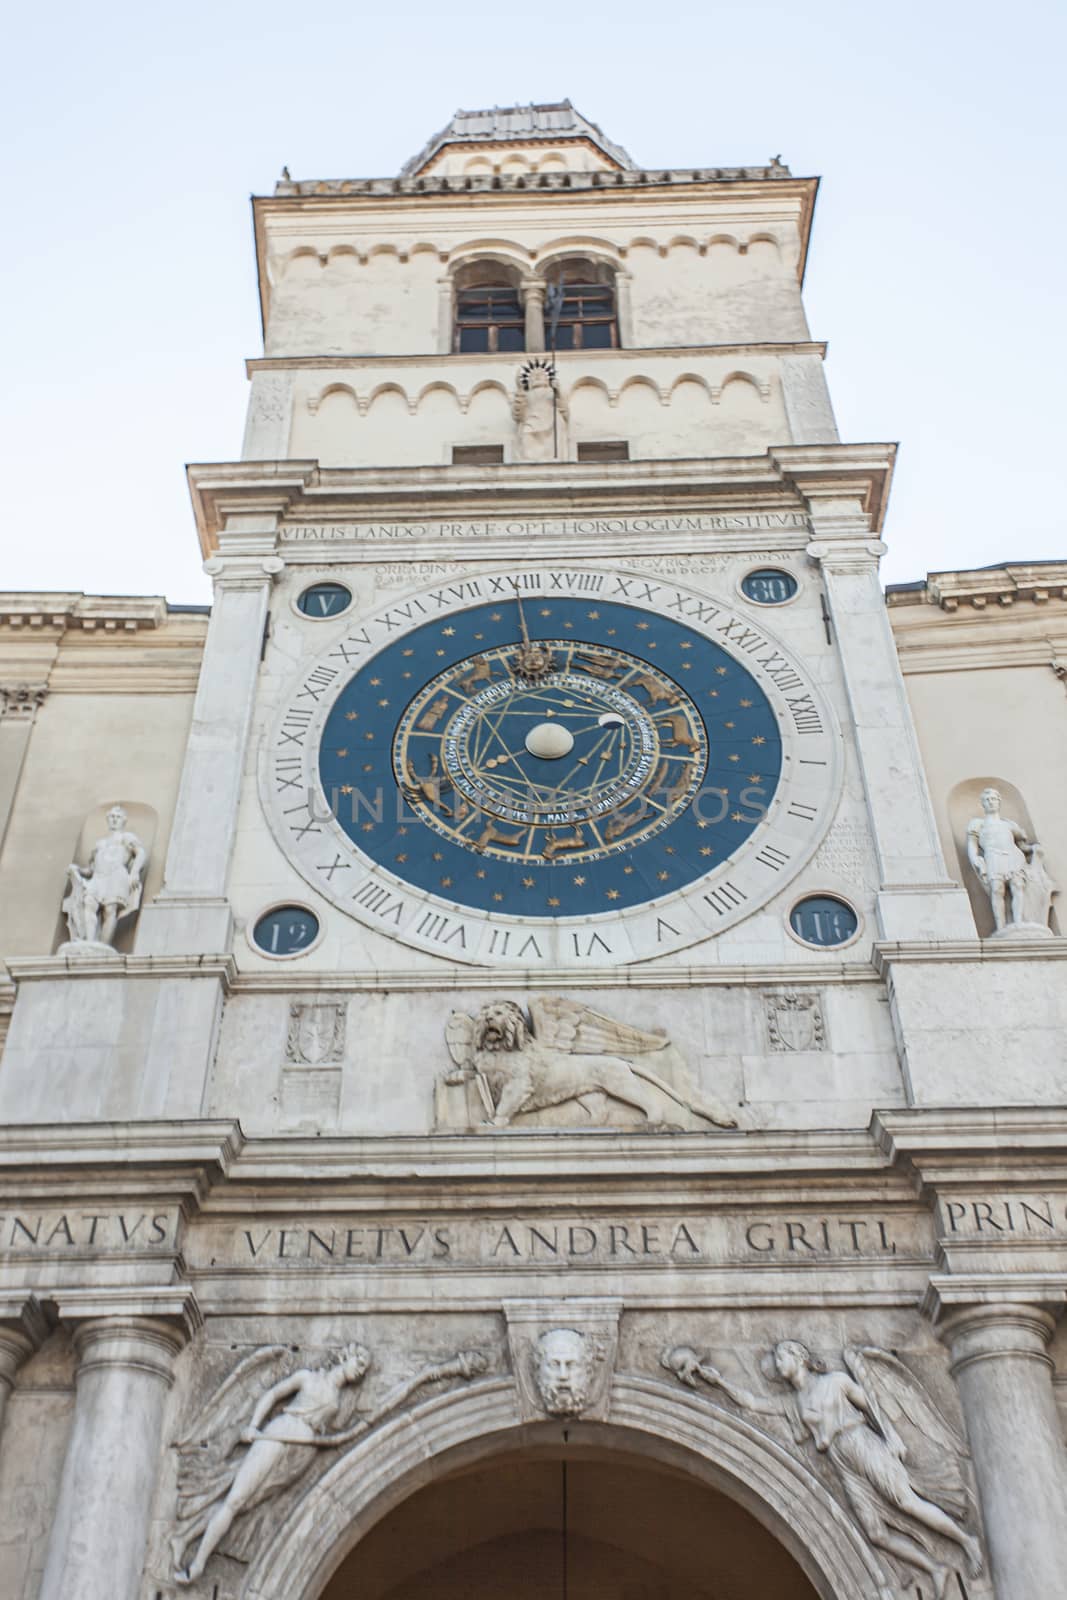 Clock tower located in Piazza dei Signori in Padua in Italy